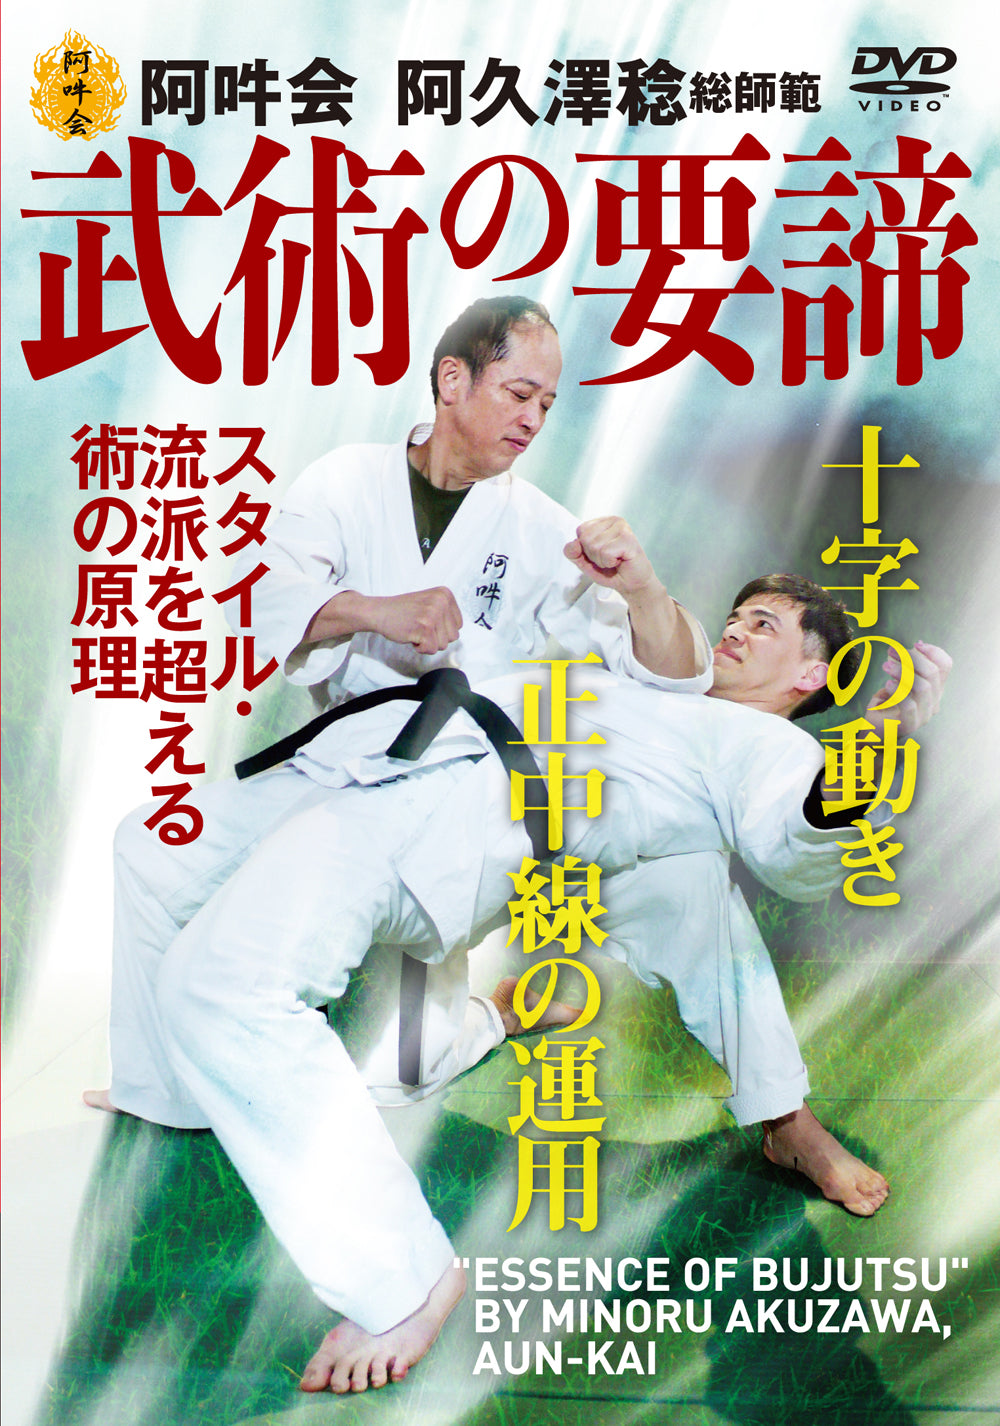 Essence of Bujutsu DVD by Minoru Akuzawa of Aunkai